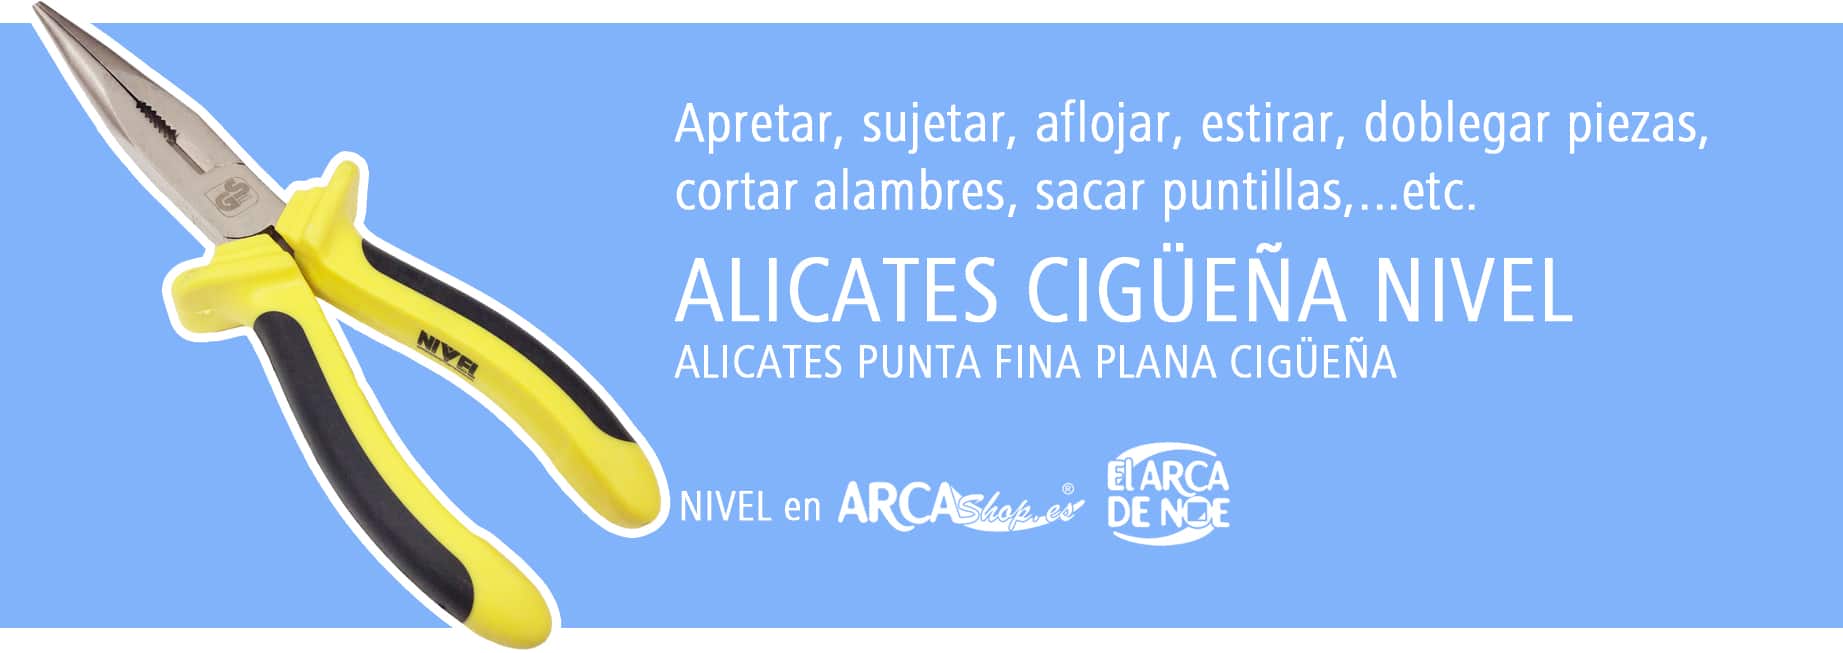 Alicate Cigüeña Punta Plana. Herramienta Manual Multiusos